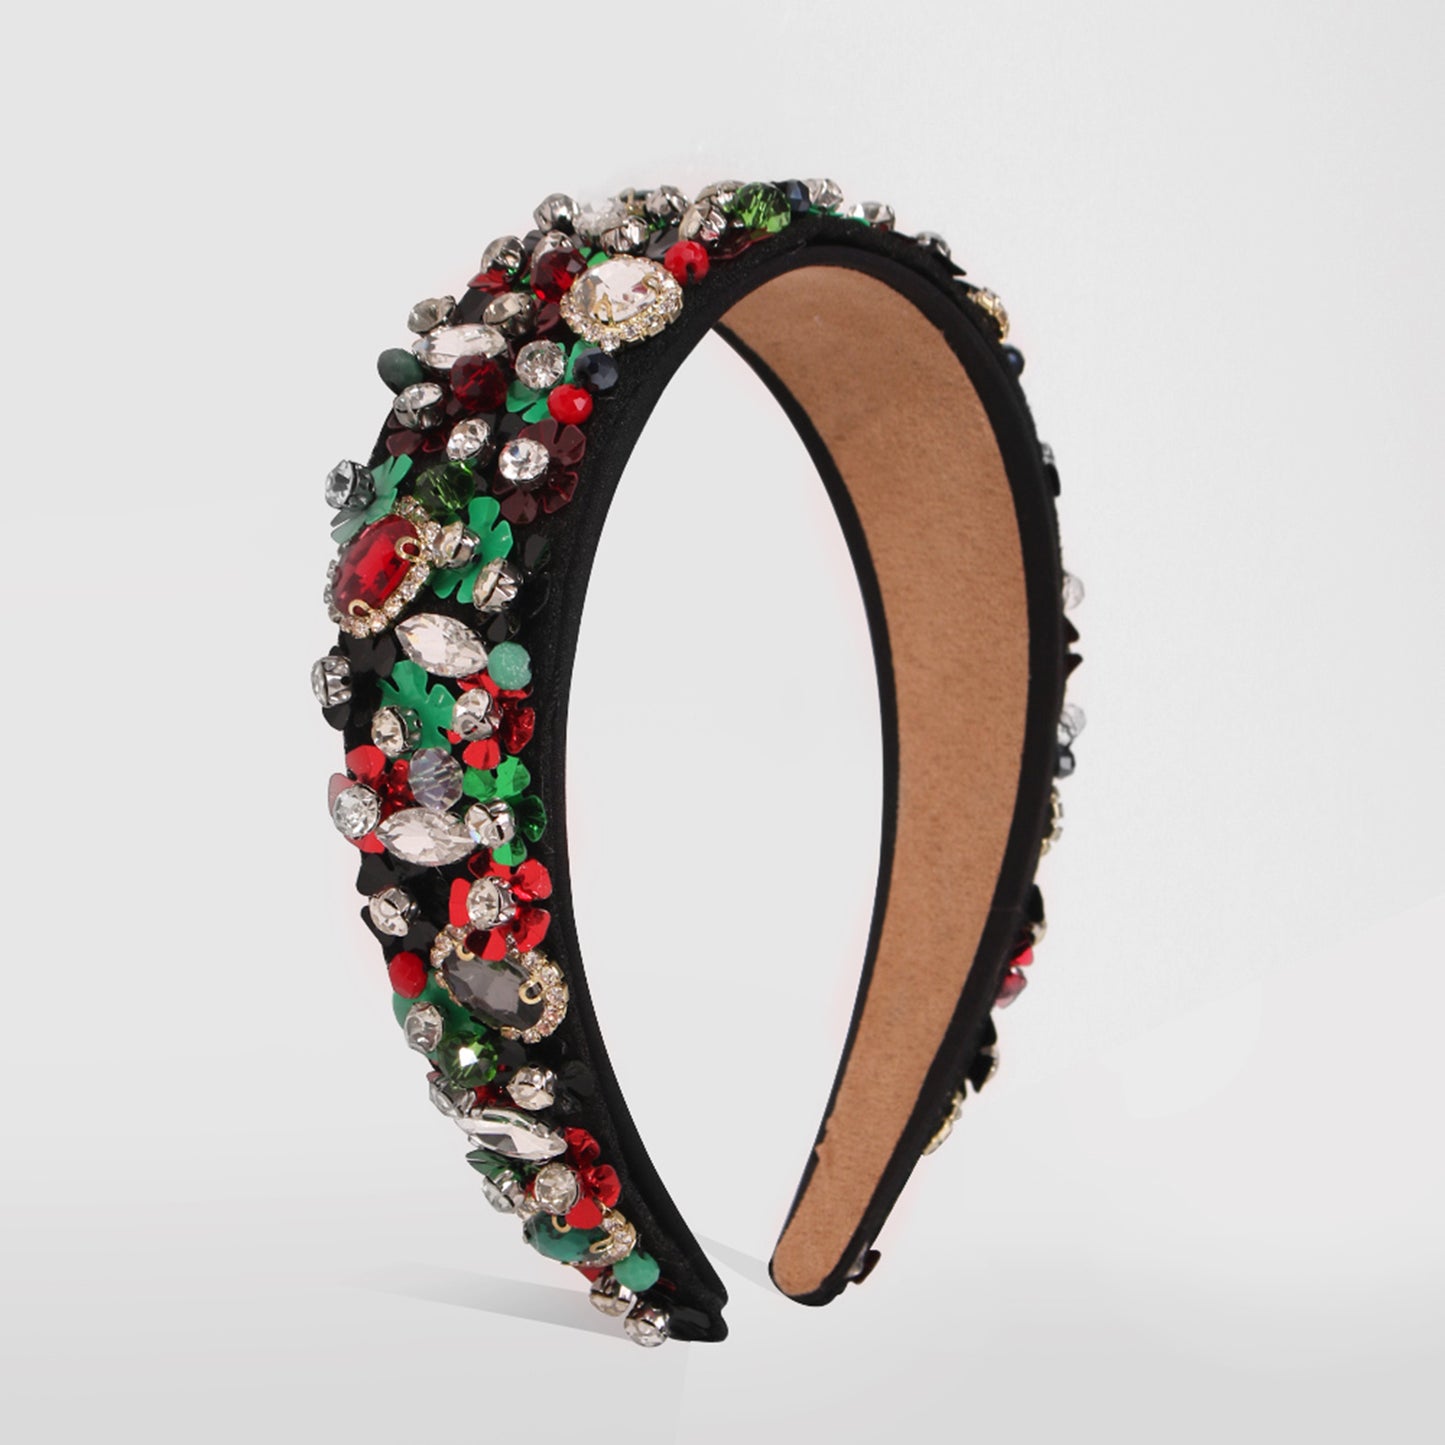 Floral Embellished Luxurious Headbands, Christmas Holiday Headbands medyjewelry